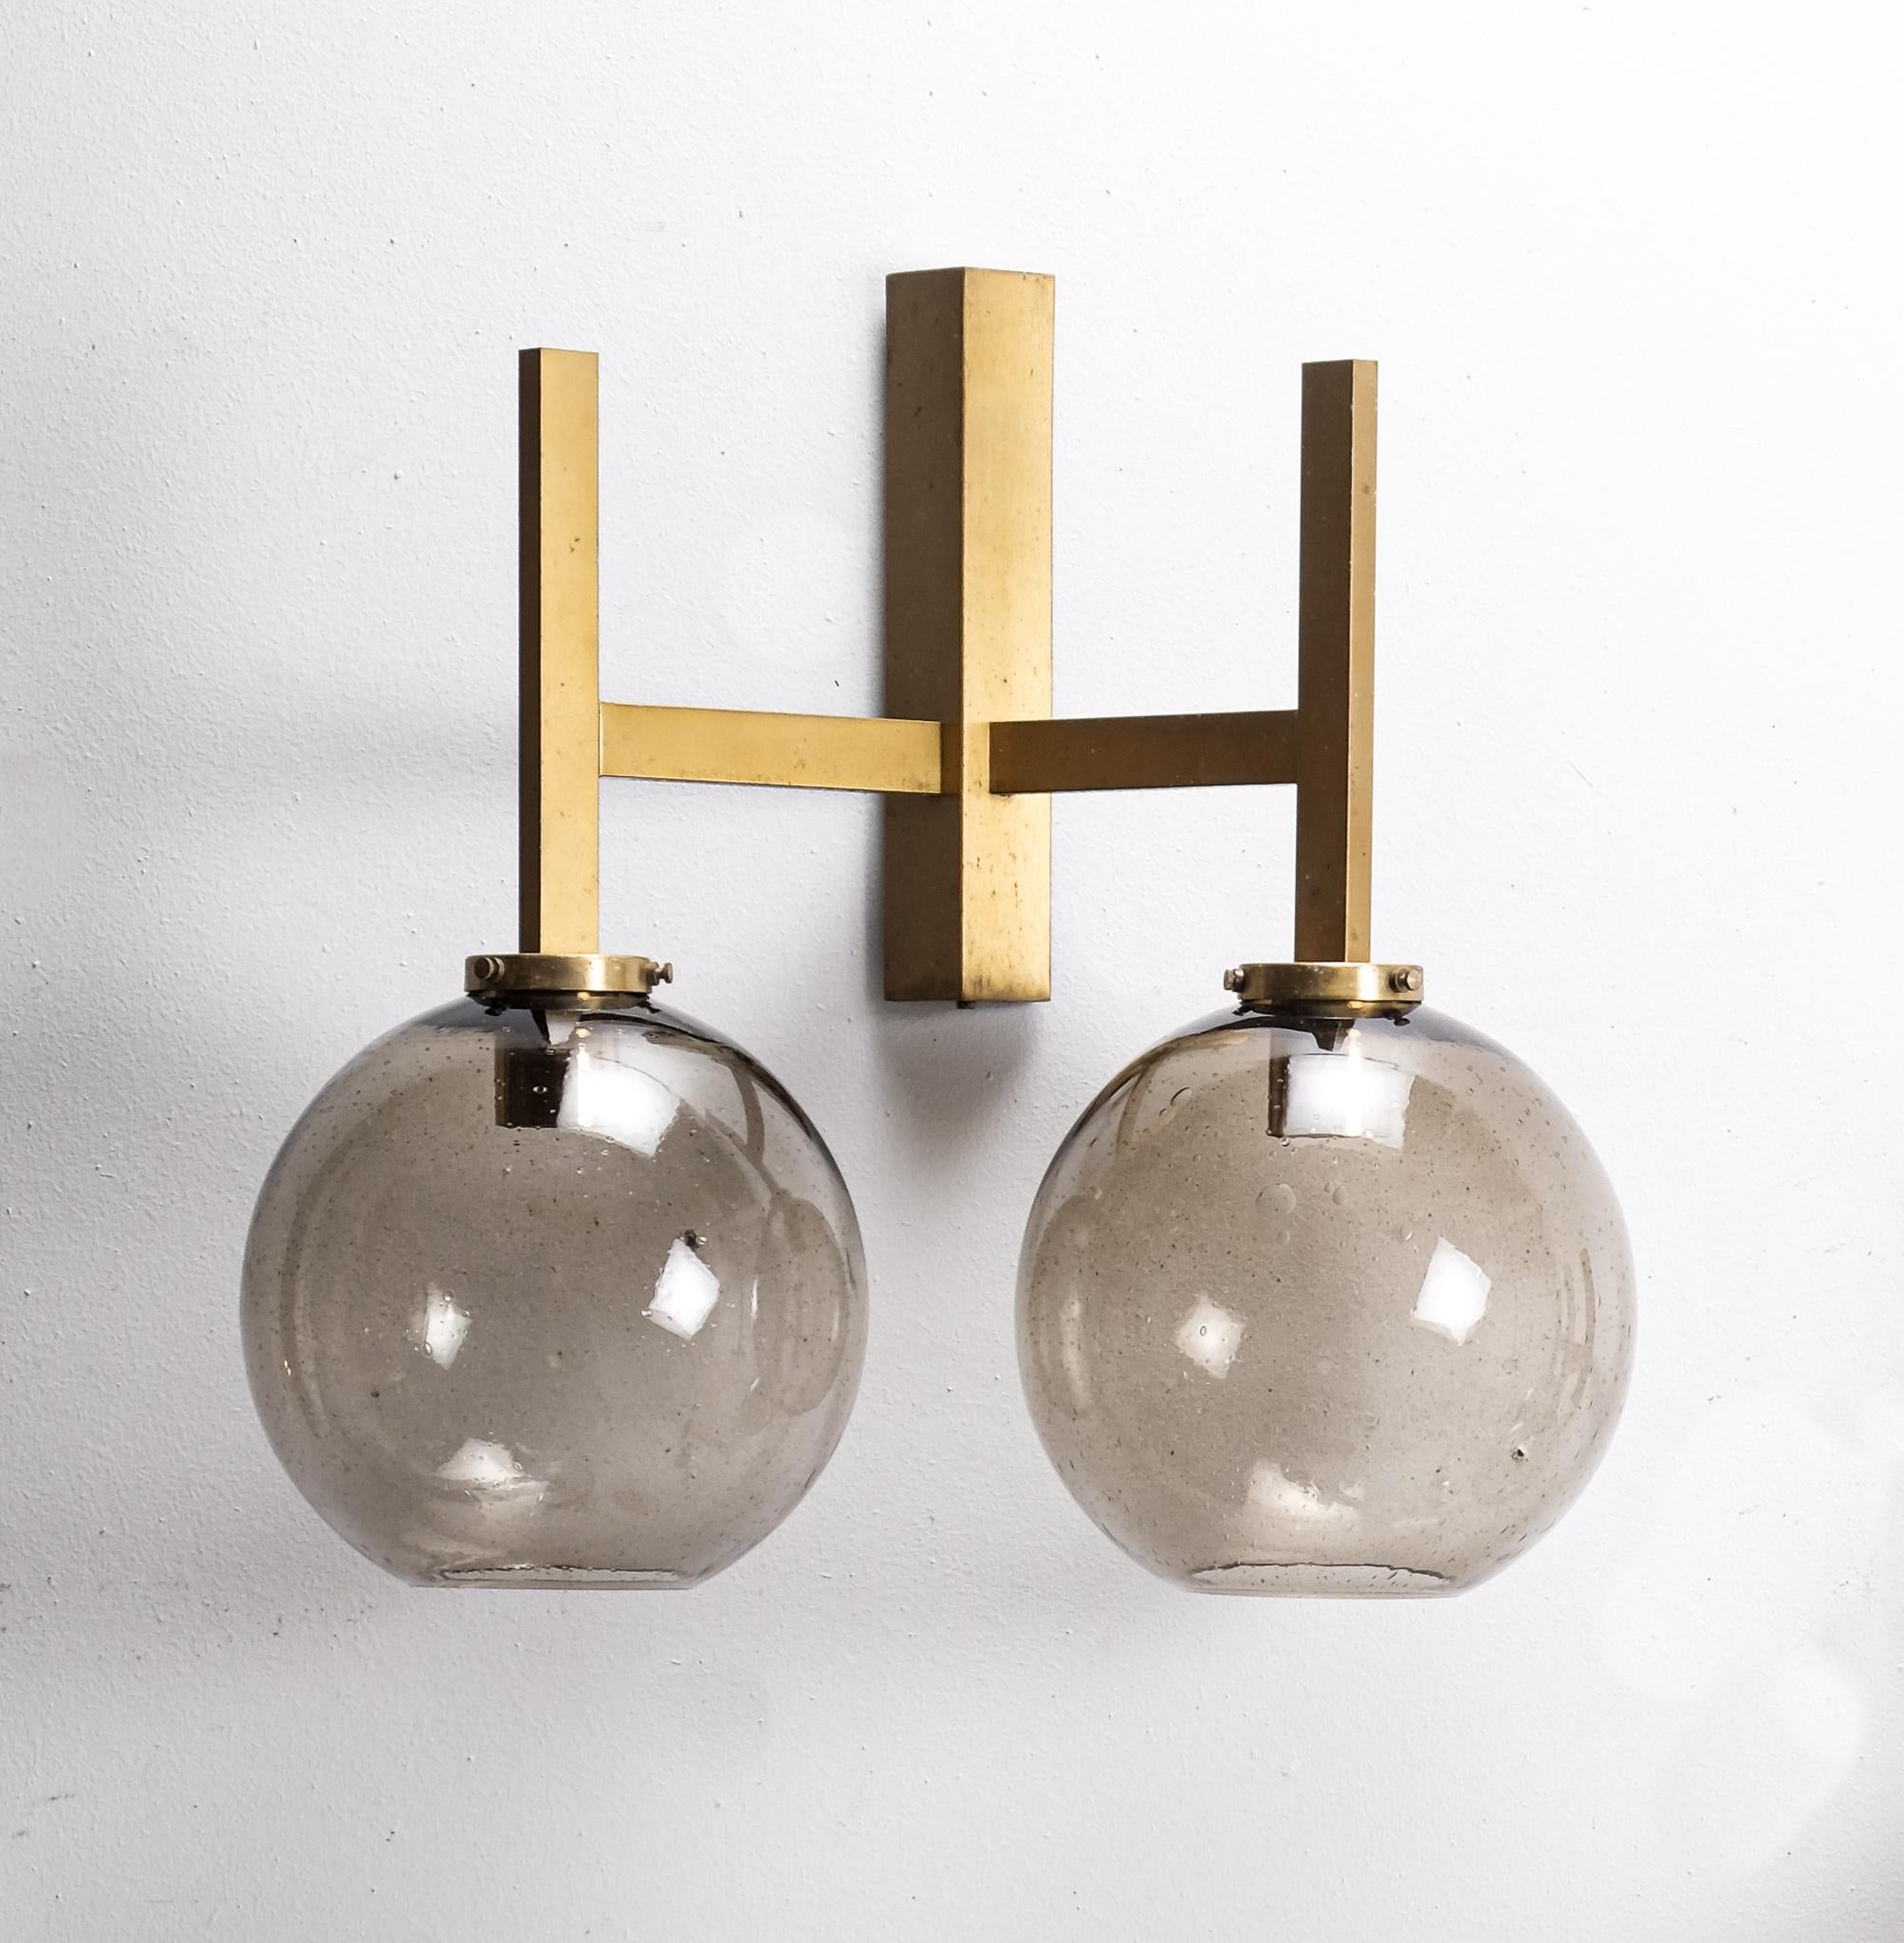 Scandinavian Modern Set of 3 Large Brass Wall Lamps by Holger Johansson, Sweden, 1960s For Sale